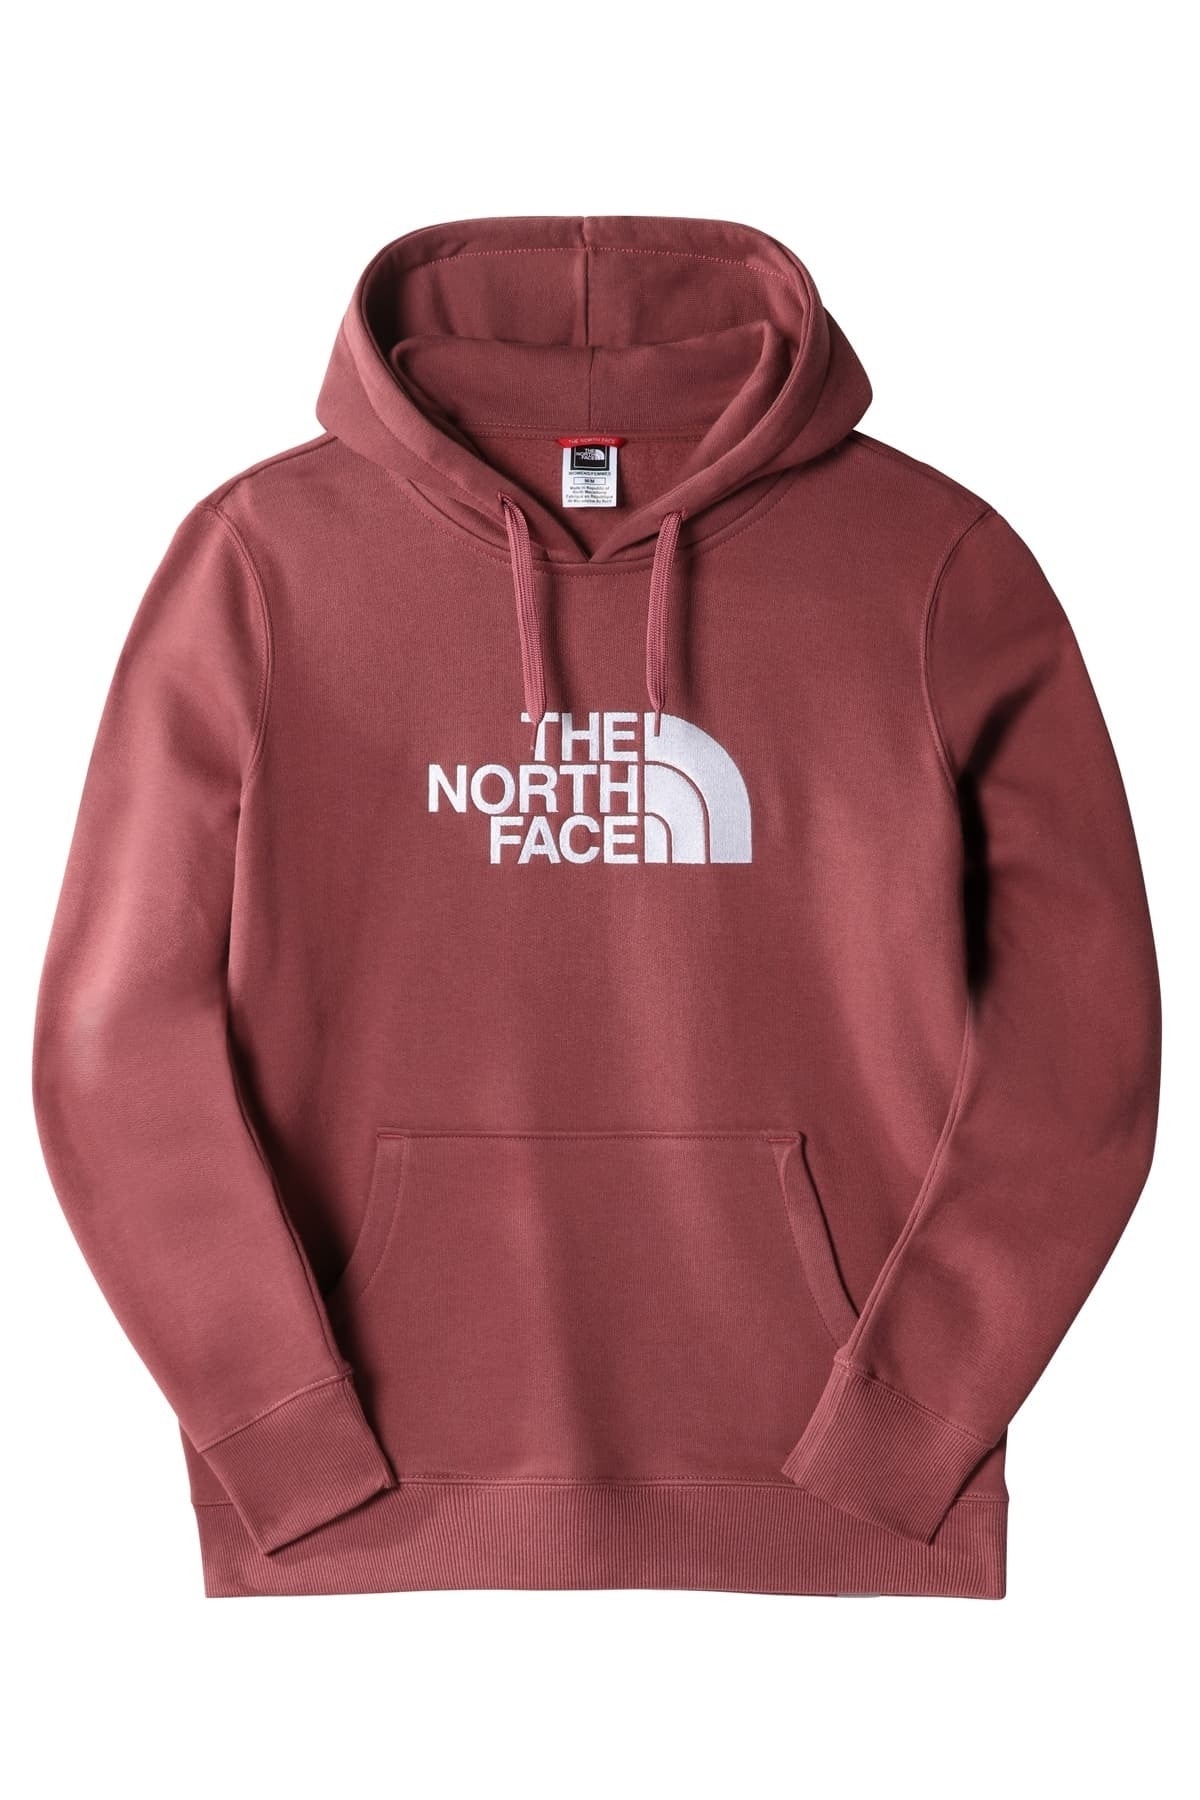 THE NORTH FACE Drew Peak Pullover Hoodıe - Eu Kadın Sweatshirt - Nf0a55ec